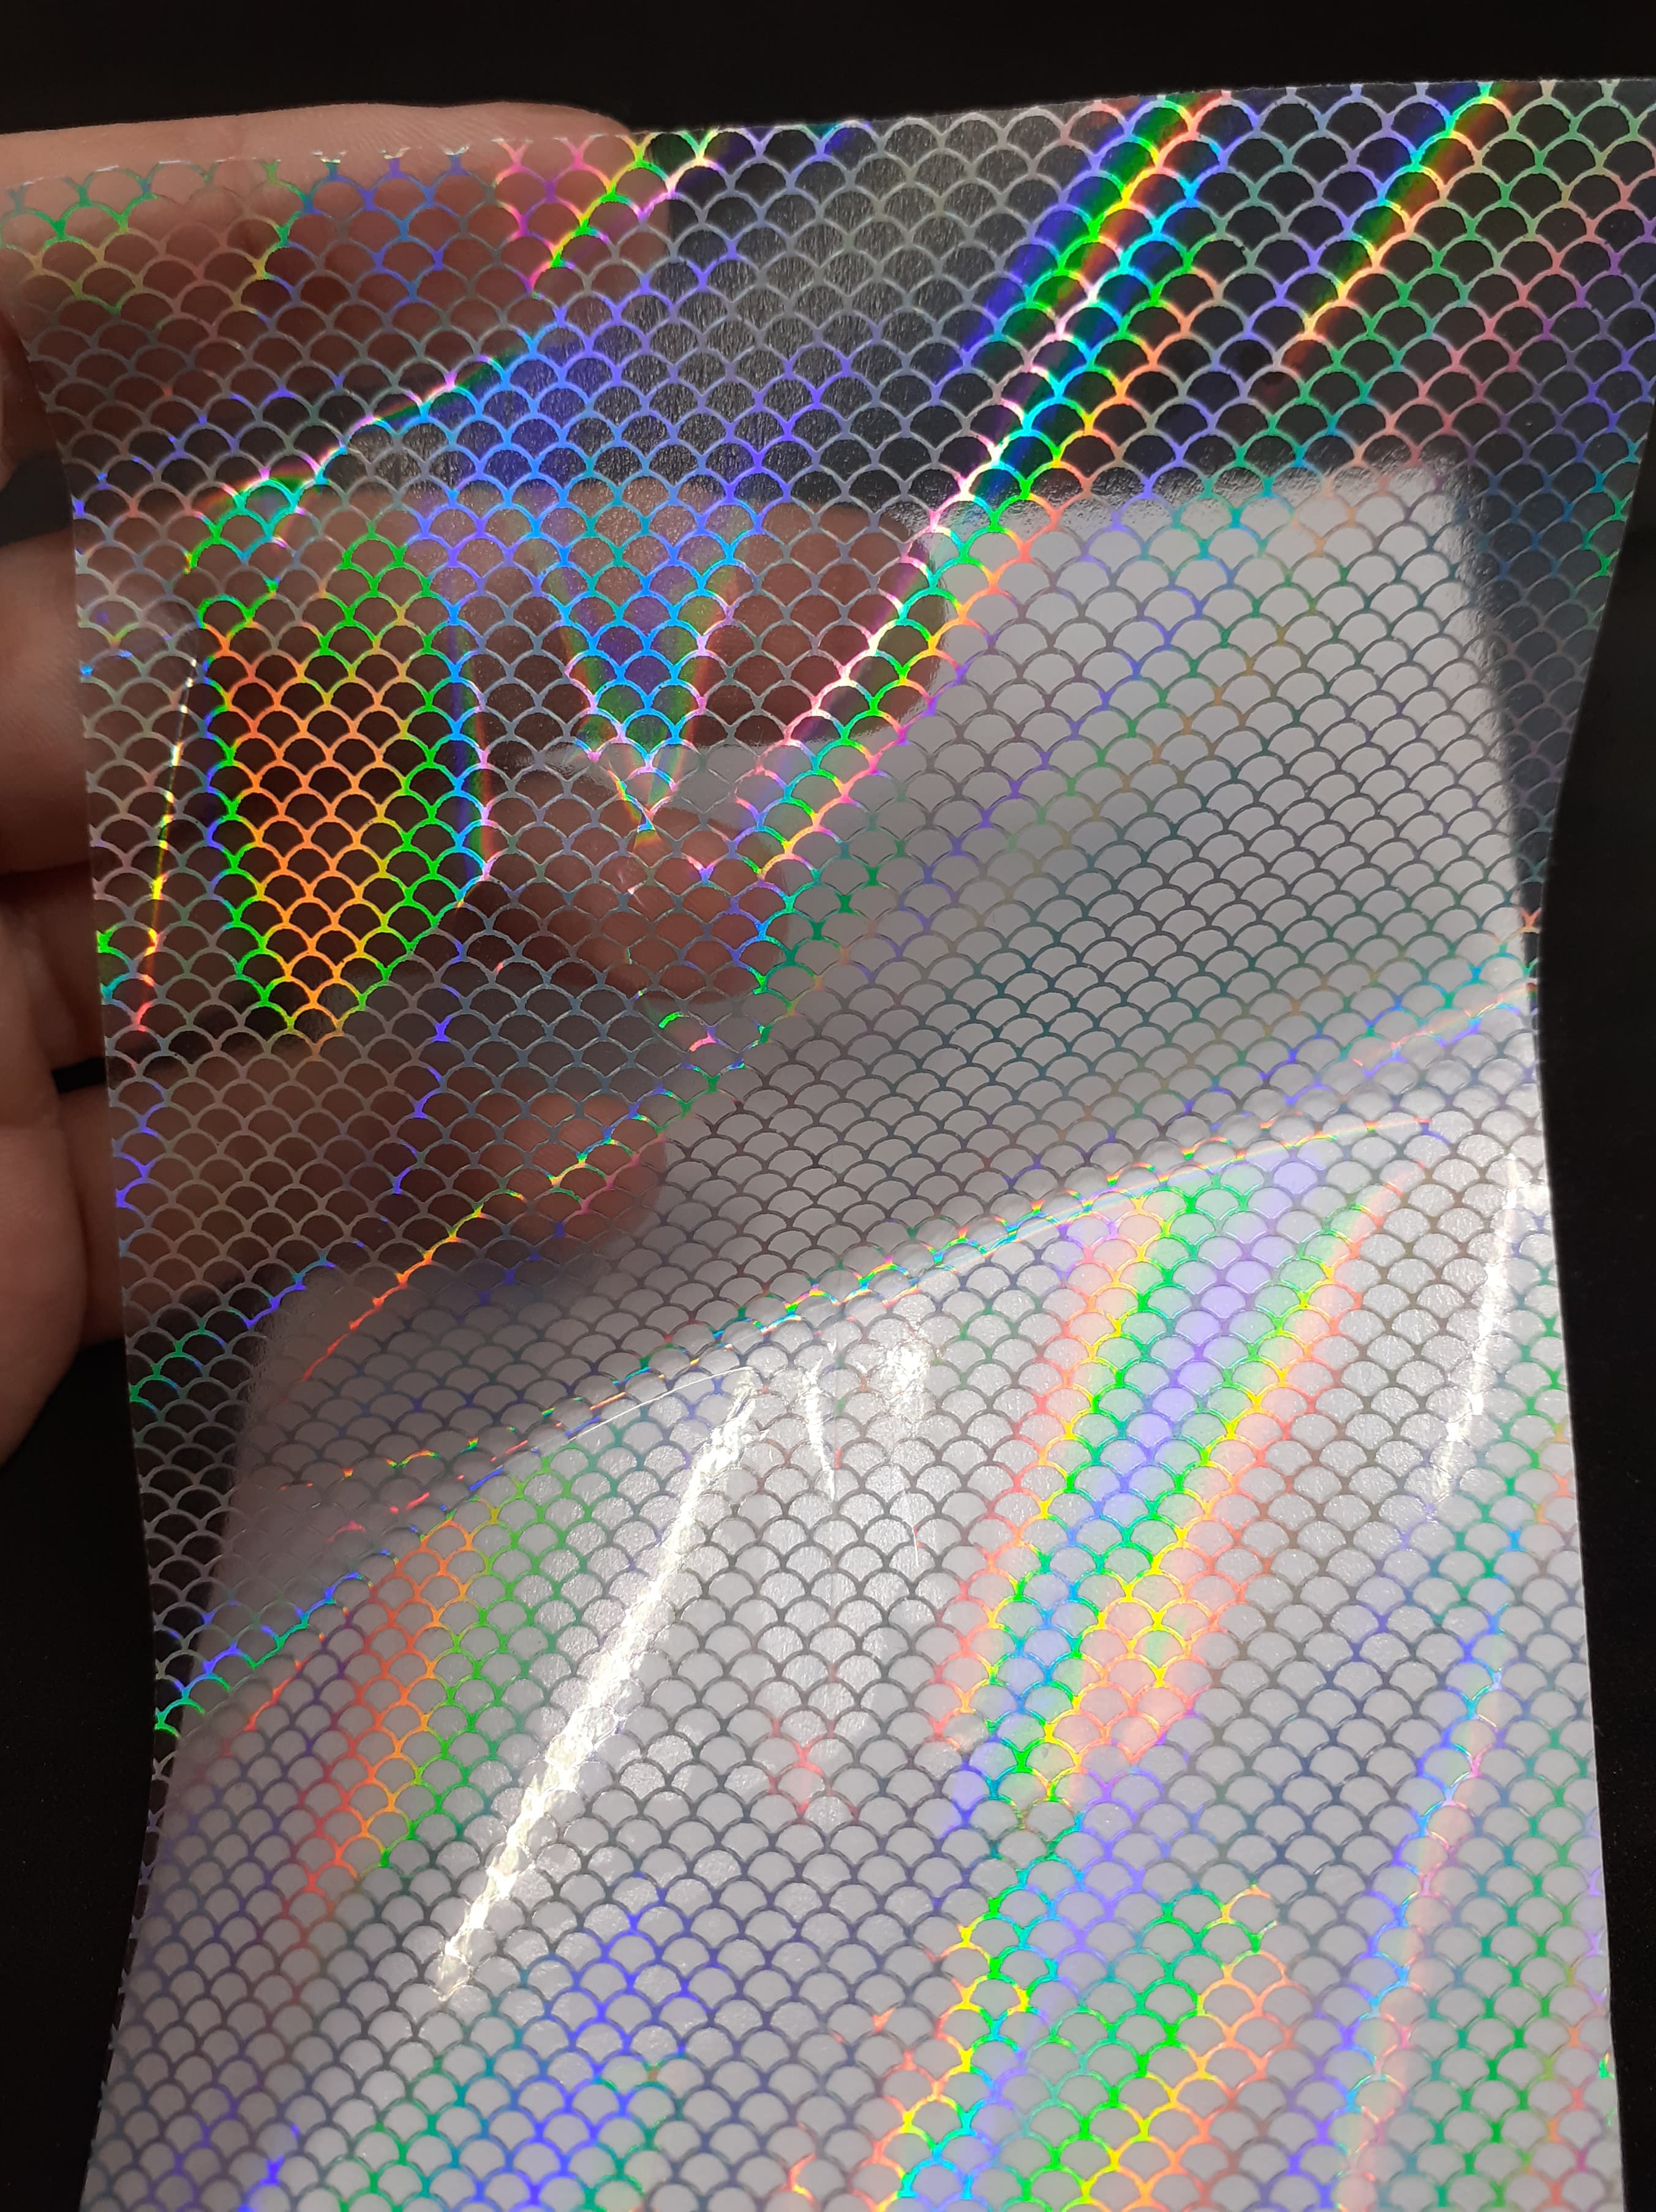 holographic foil patterns